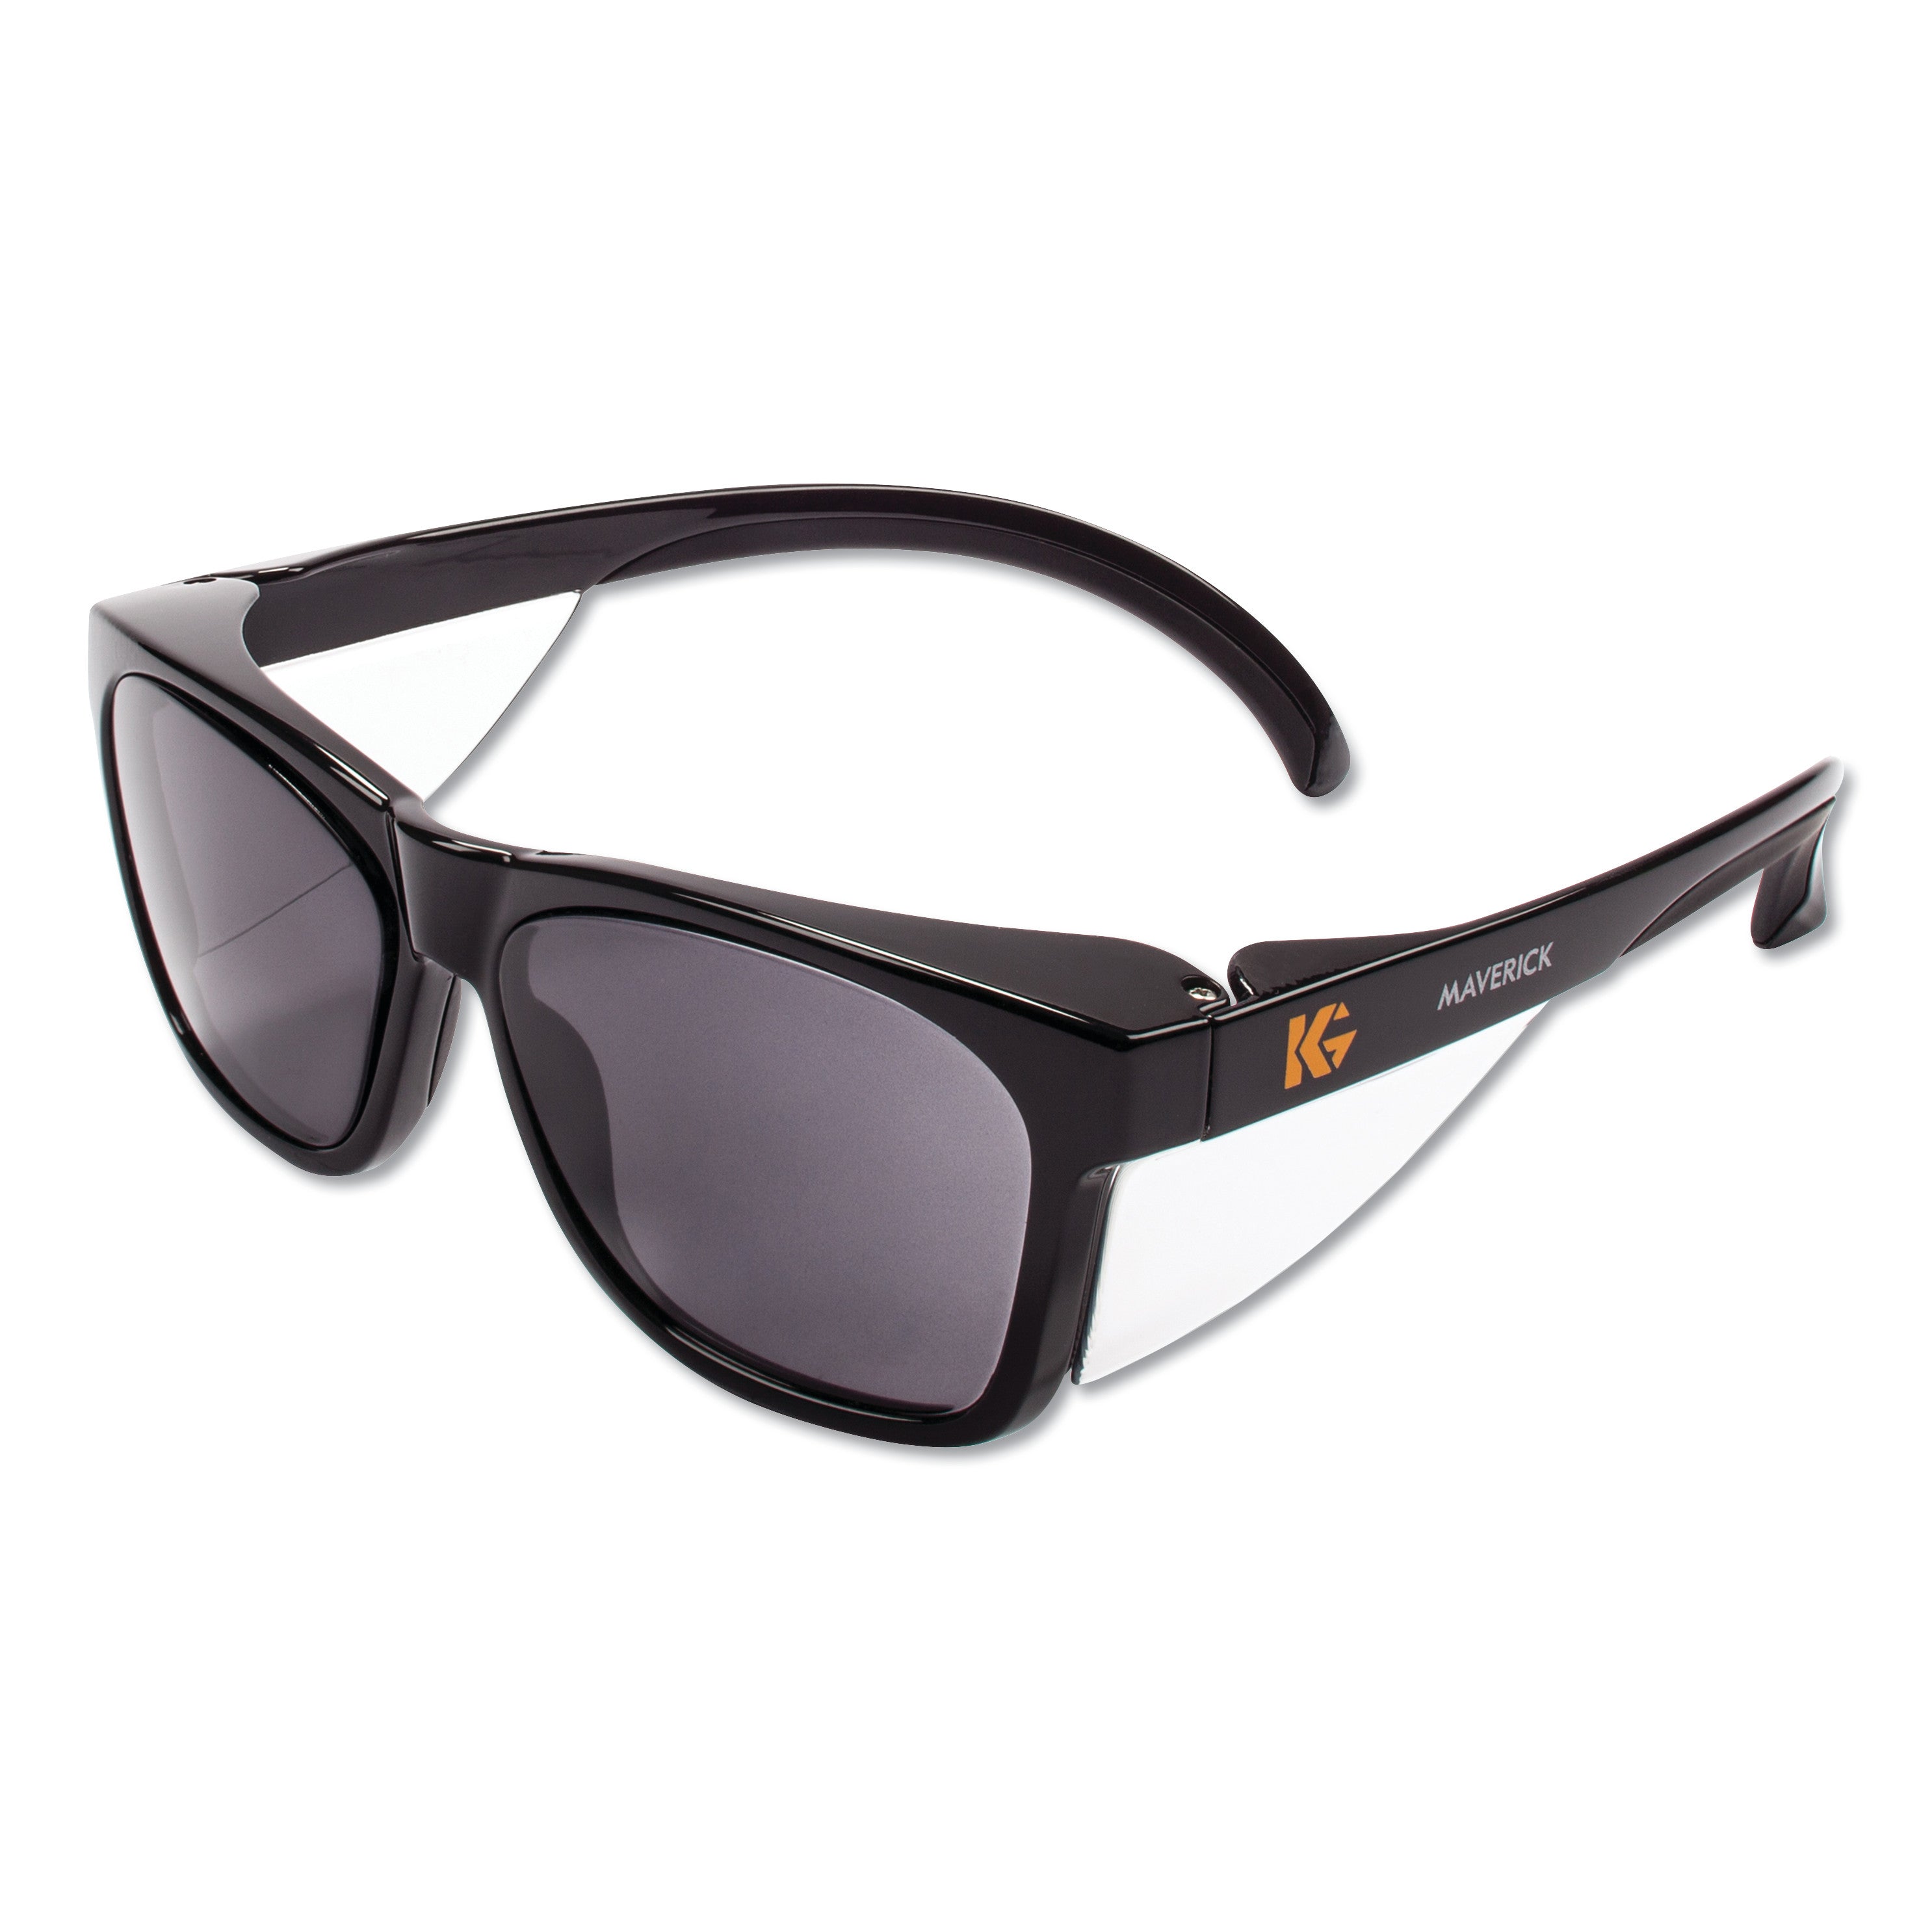 maverick-safety-glasses-black-polycarbonate-frame-smoke-lens-12-box_kcc49311 - 1